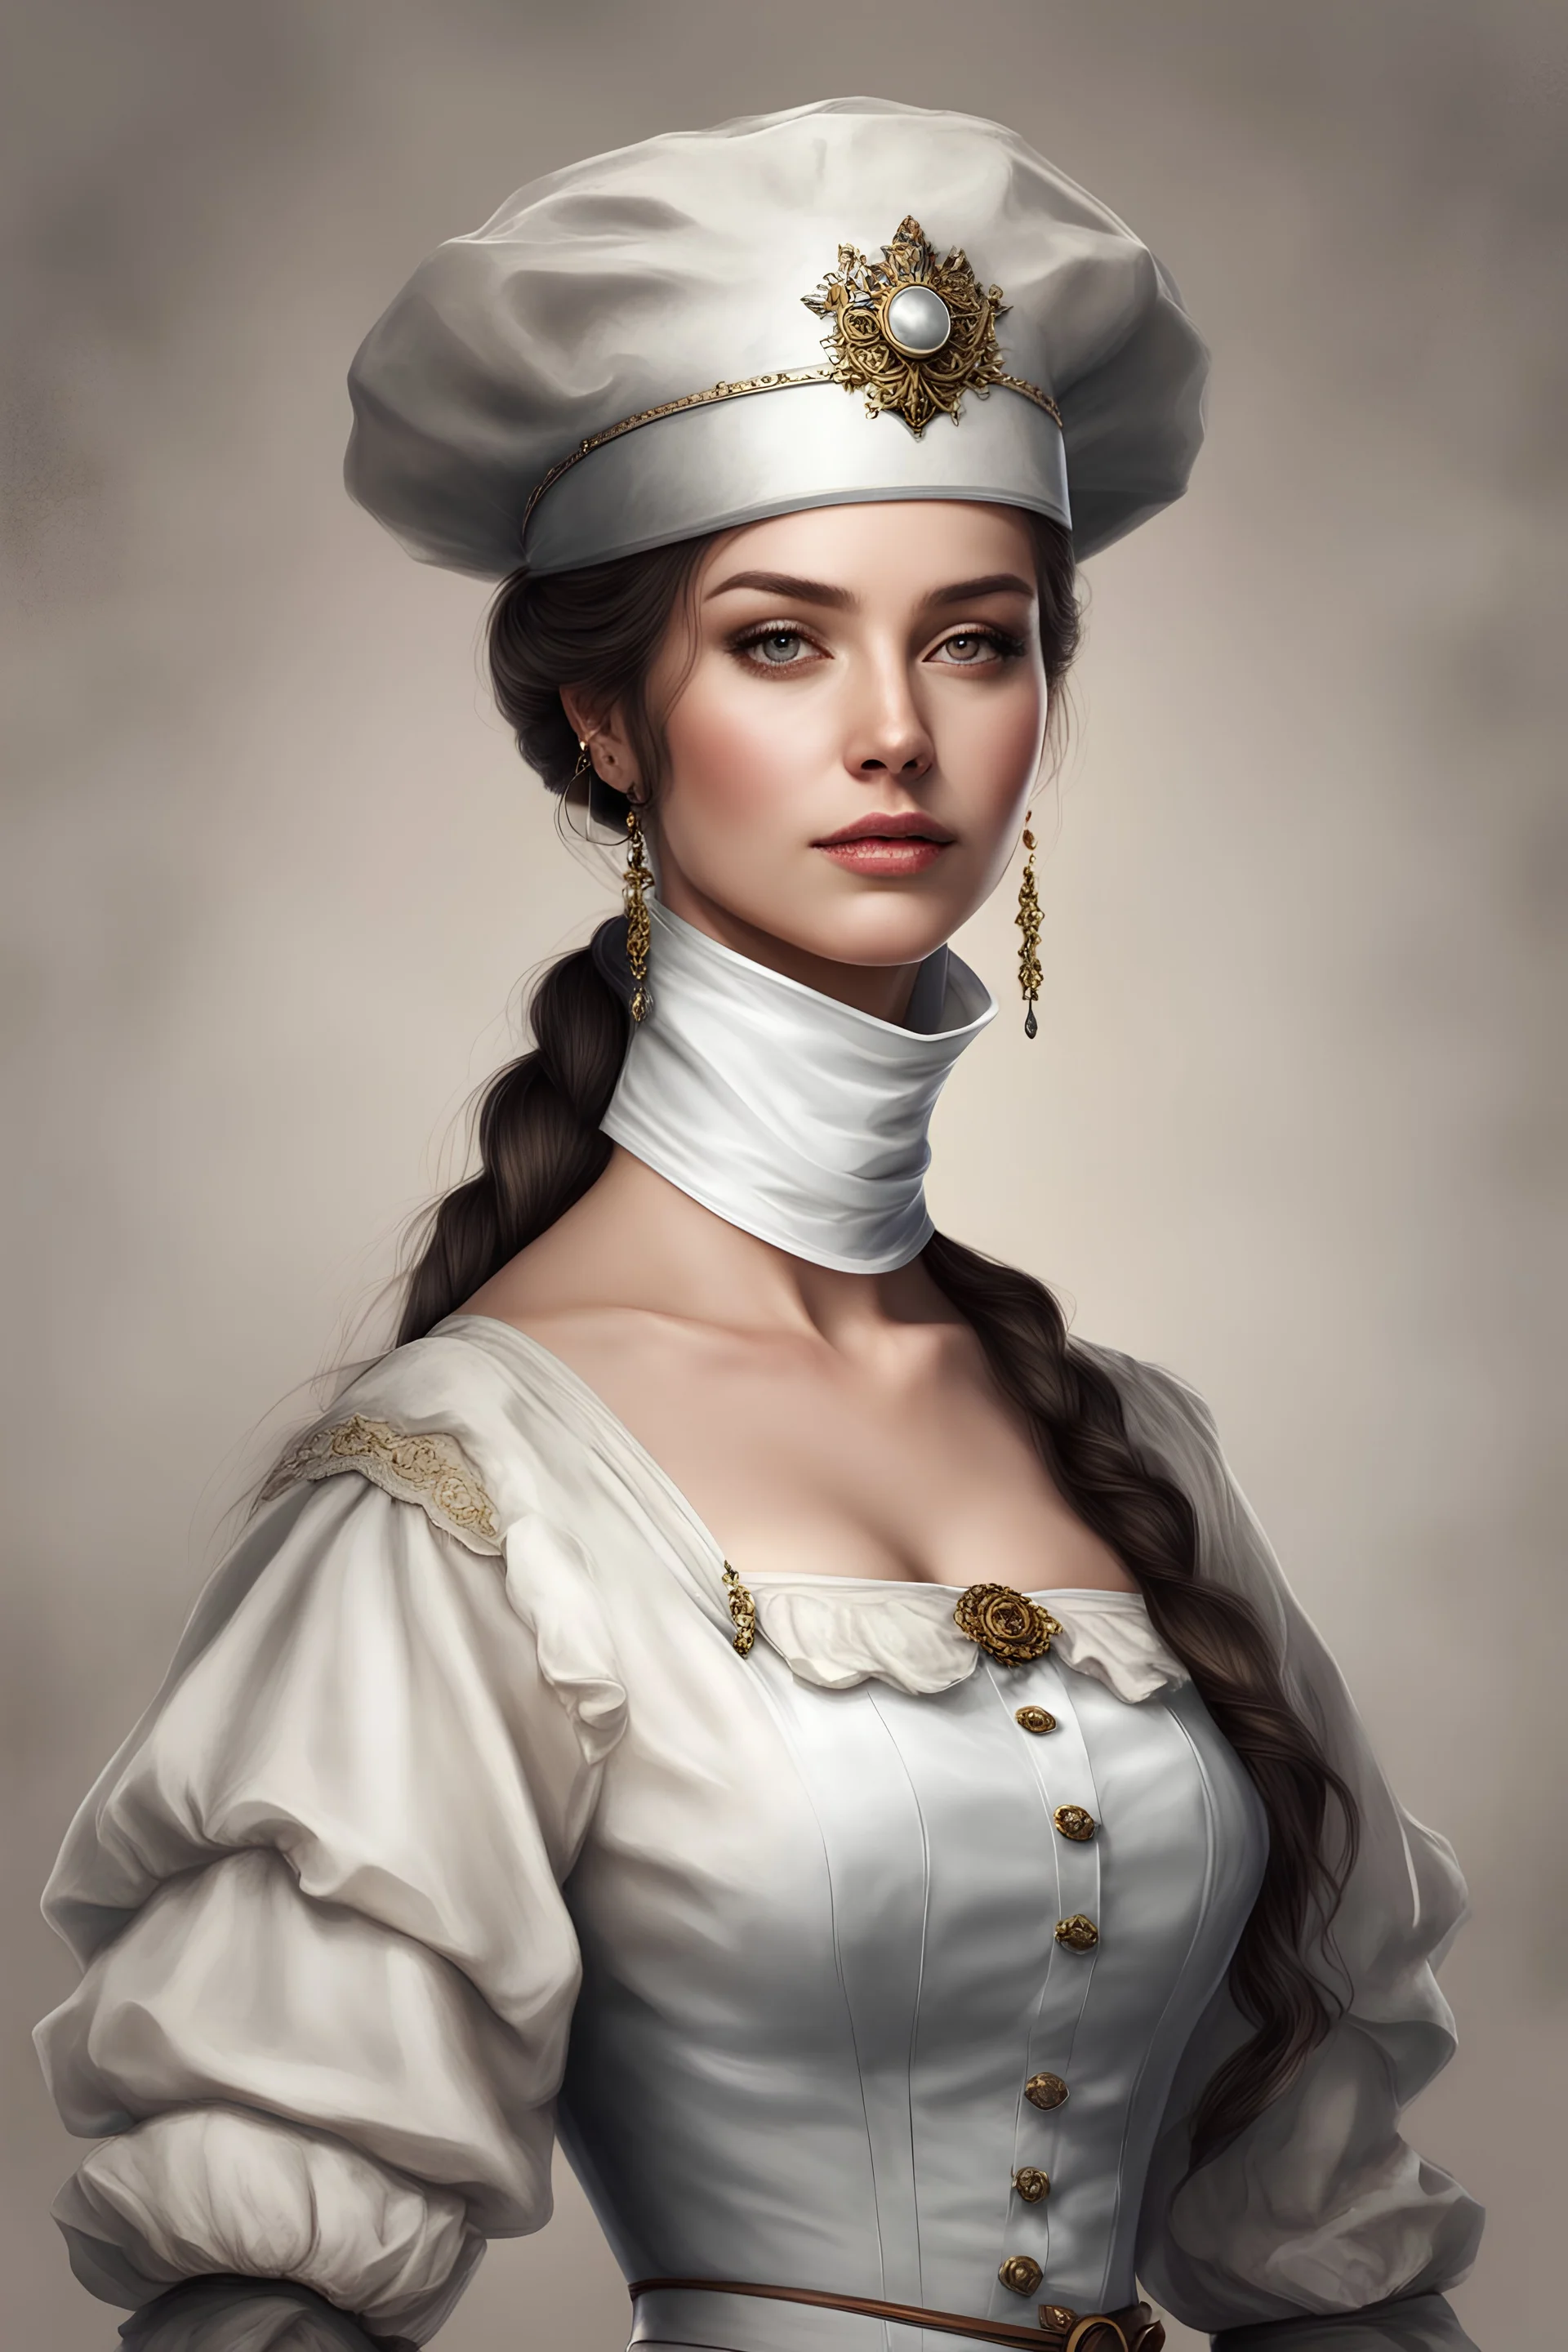 portrait of a woman, realistic style, beauty, concept art, true anatomy, clothing accessories, medieval era, nurse, emotion, hat